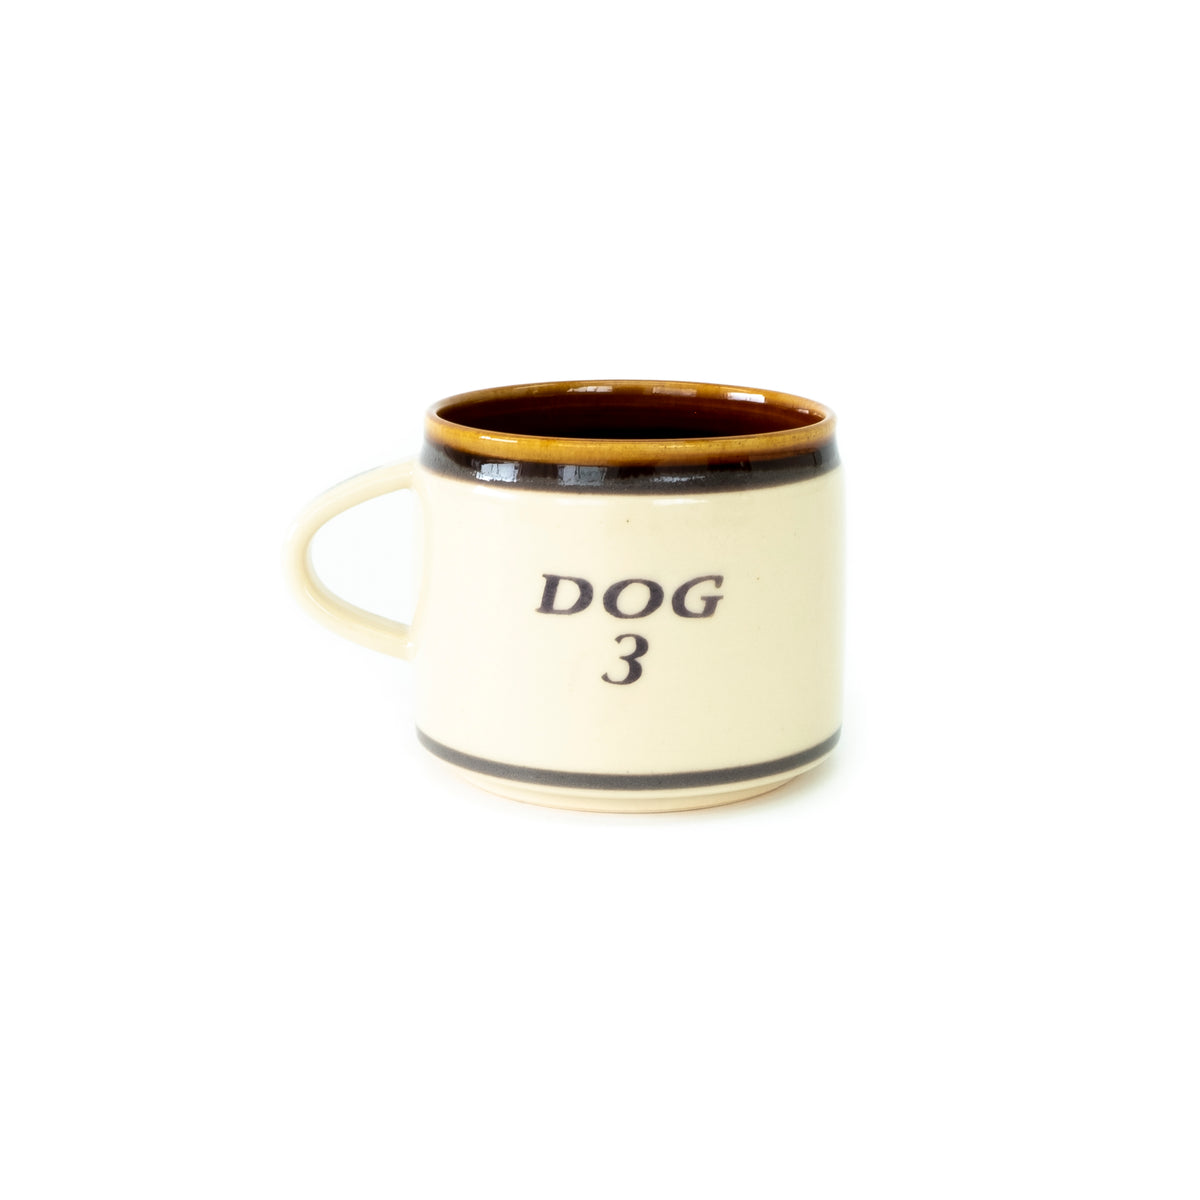 Daisak マグカップ DOG3 ドック 犬 新品